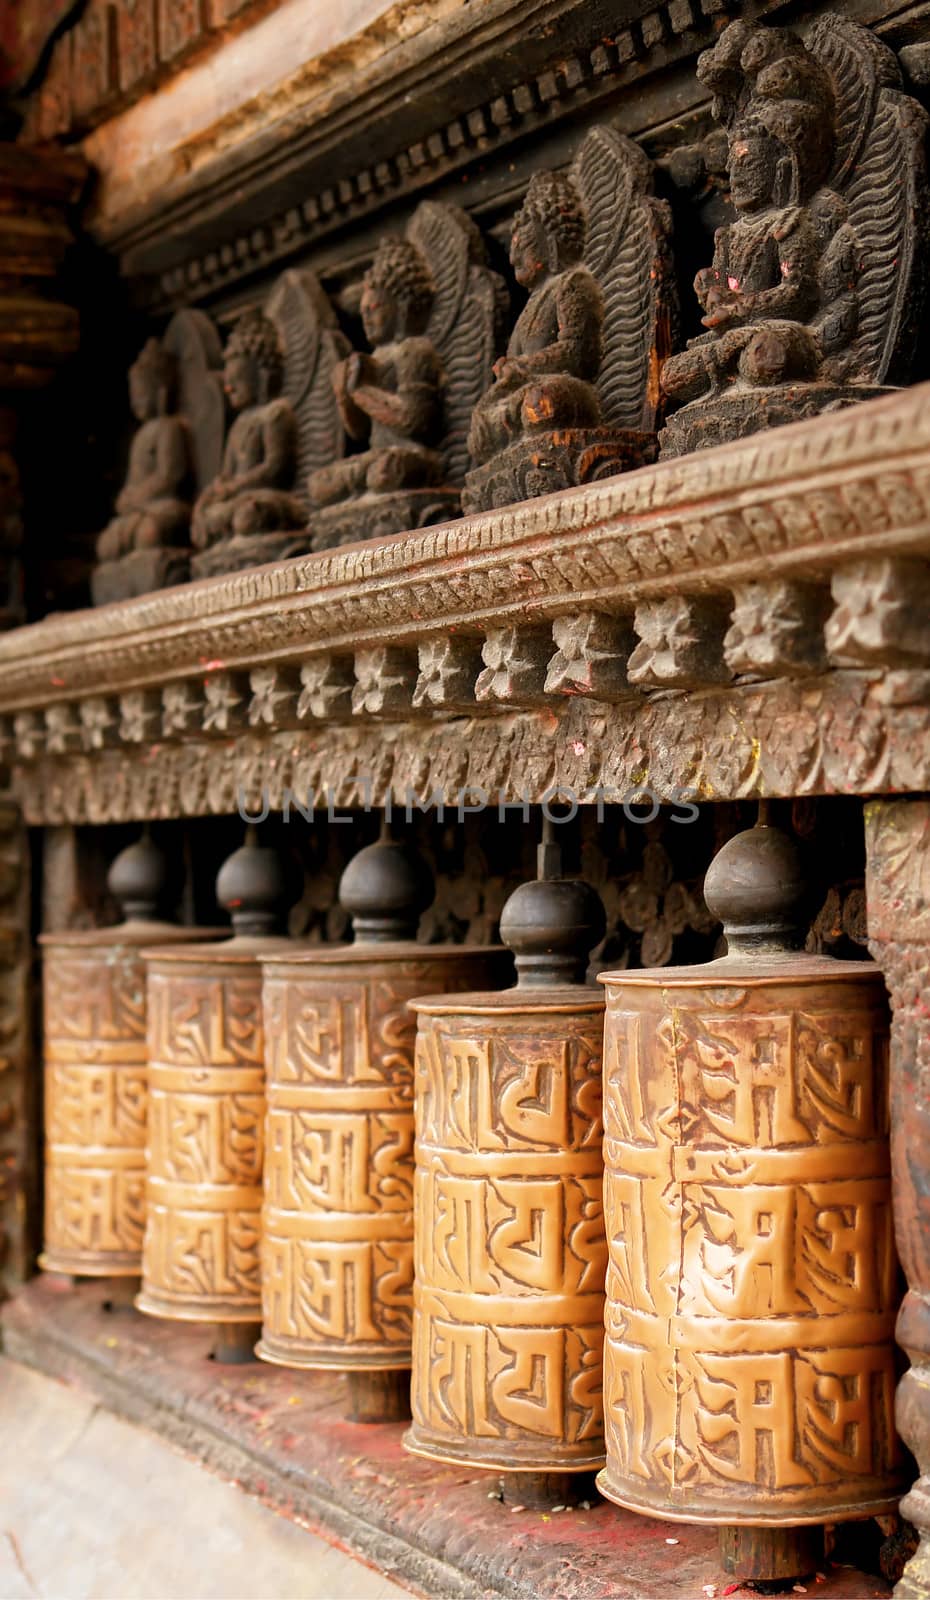 Prayer wheels at swayambhunath monkey temple in Kathmandu by ptxgarfield